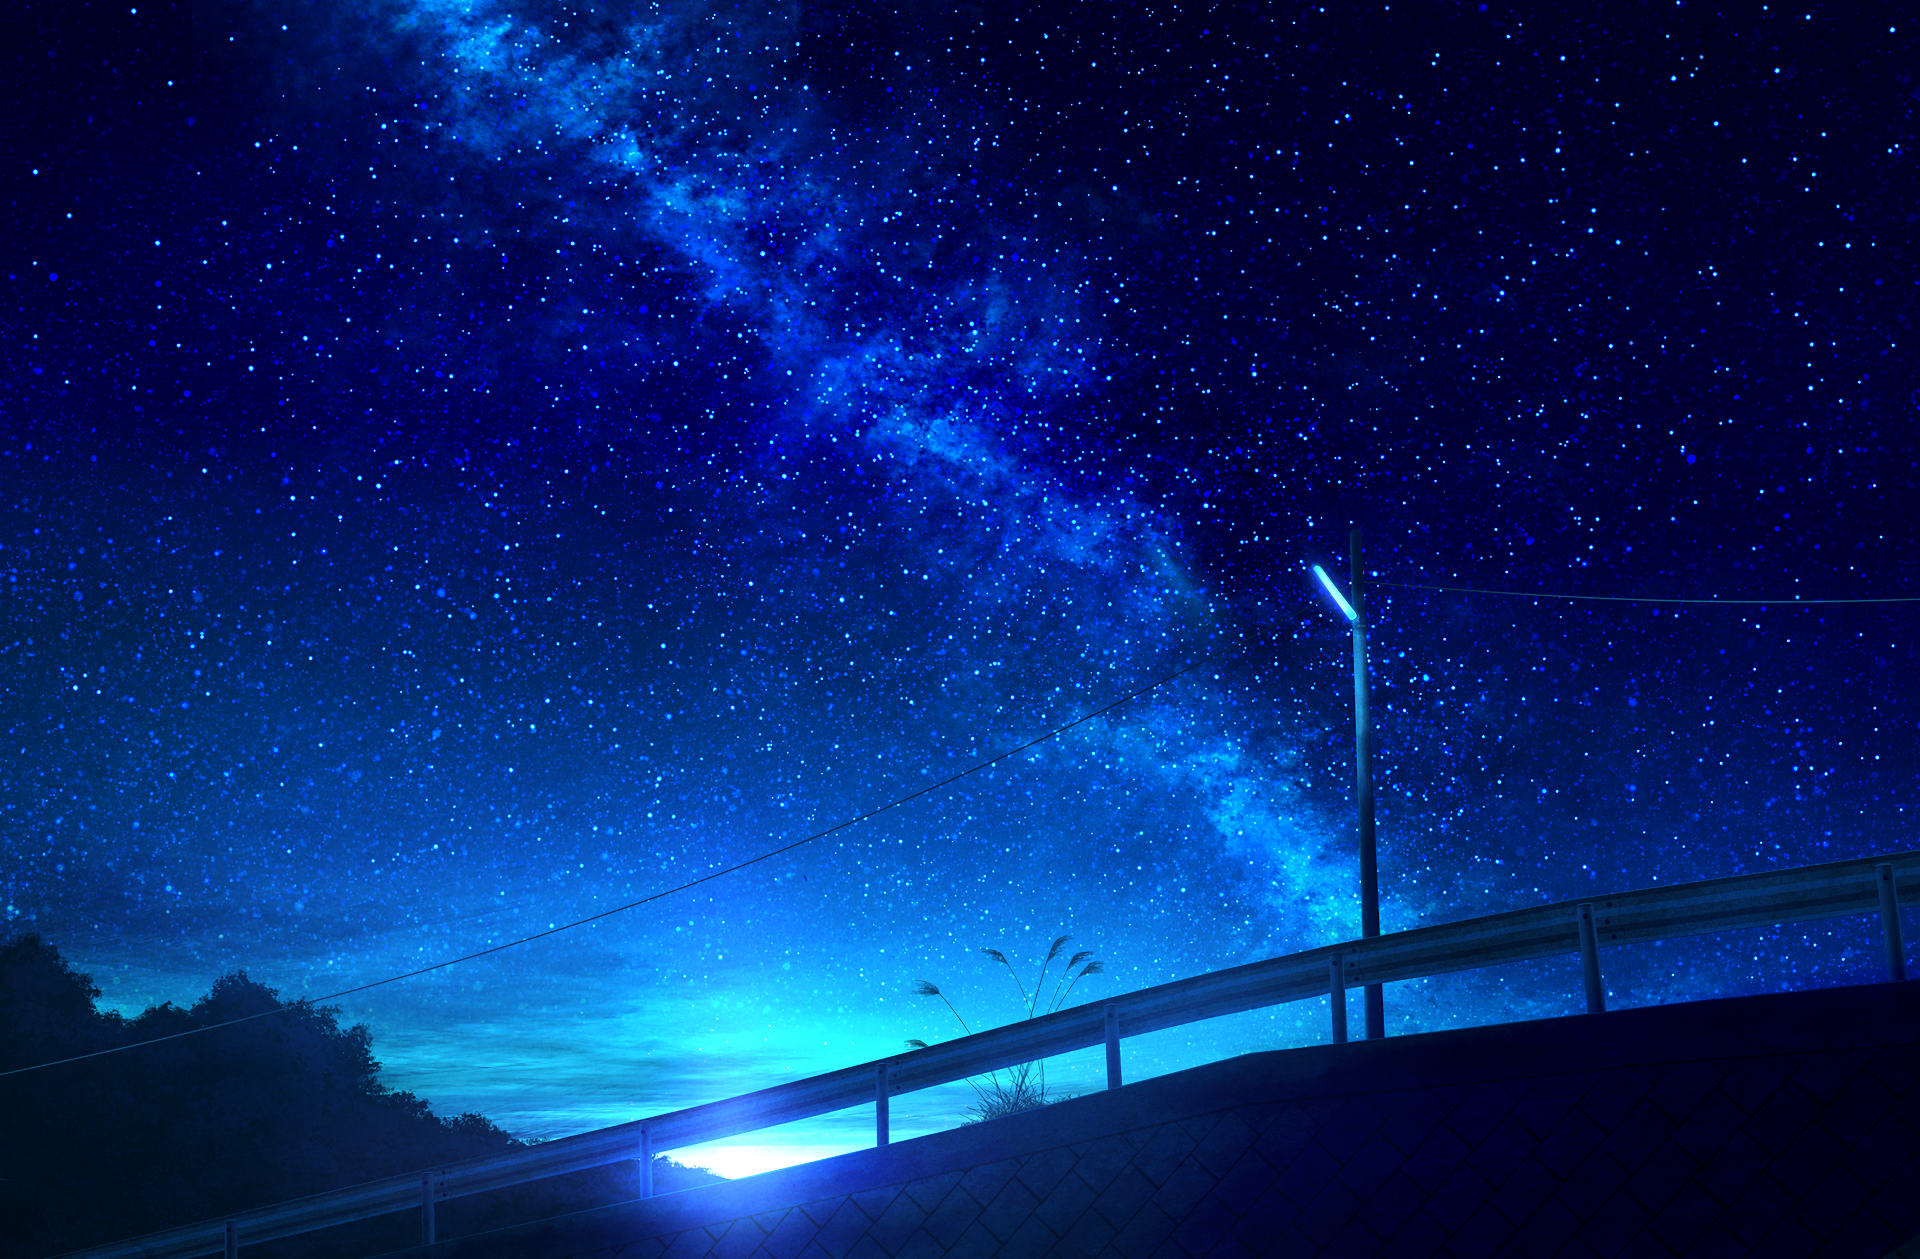 Anime Wallpaper Night Sky Galaxy Anime .com